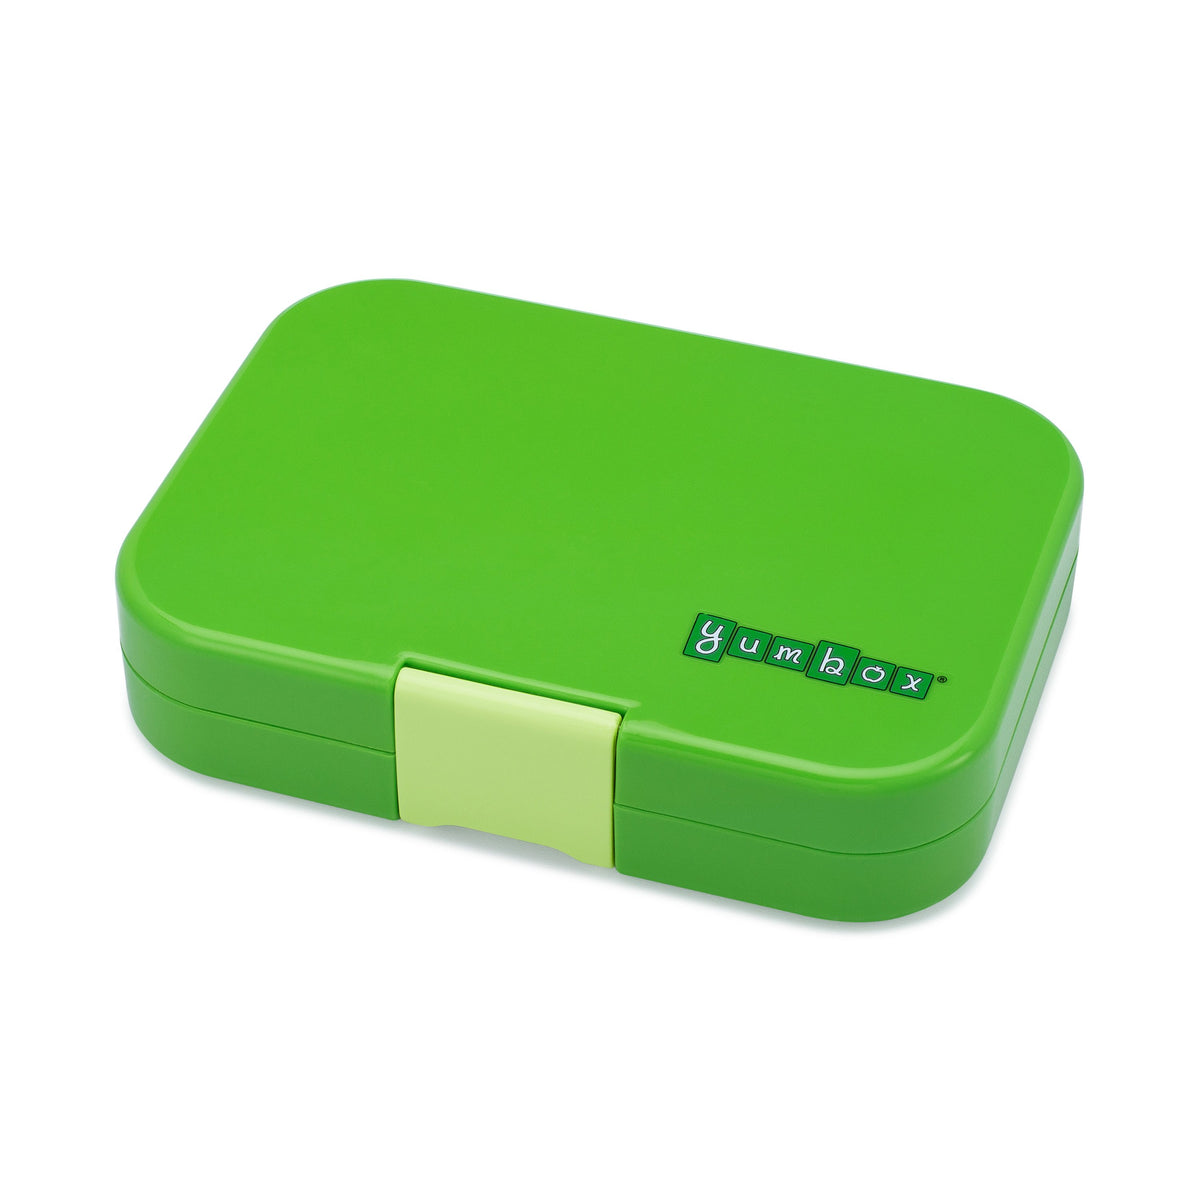 yumbox-panino-cilantro-green-4-compartment-lunch-box- (1)